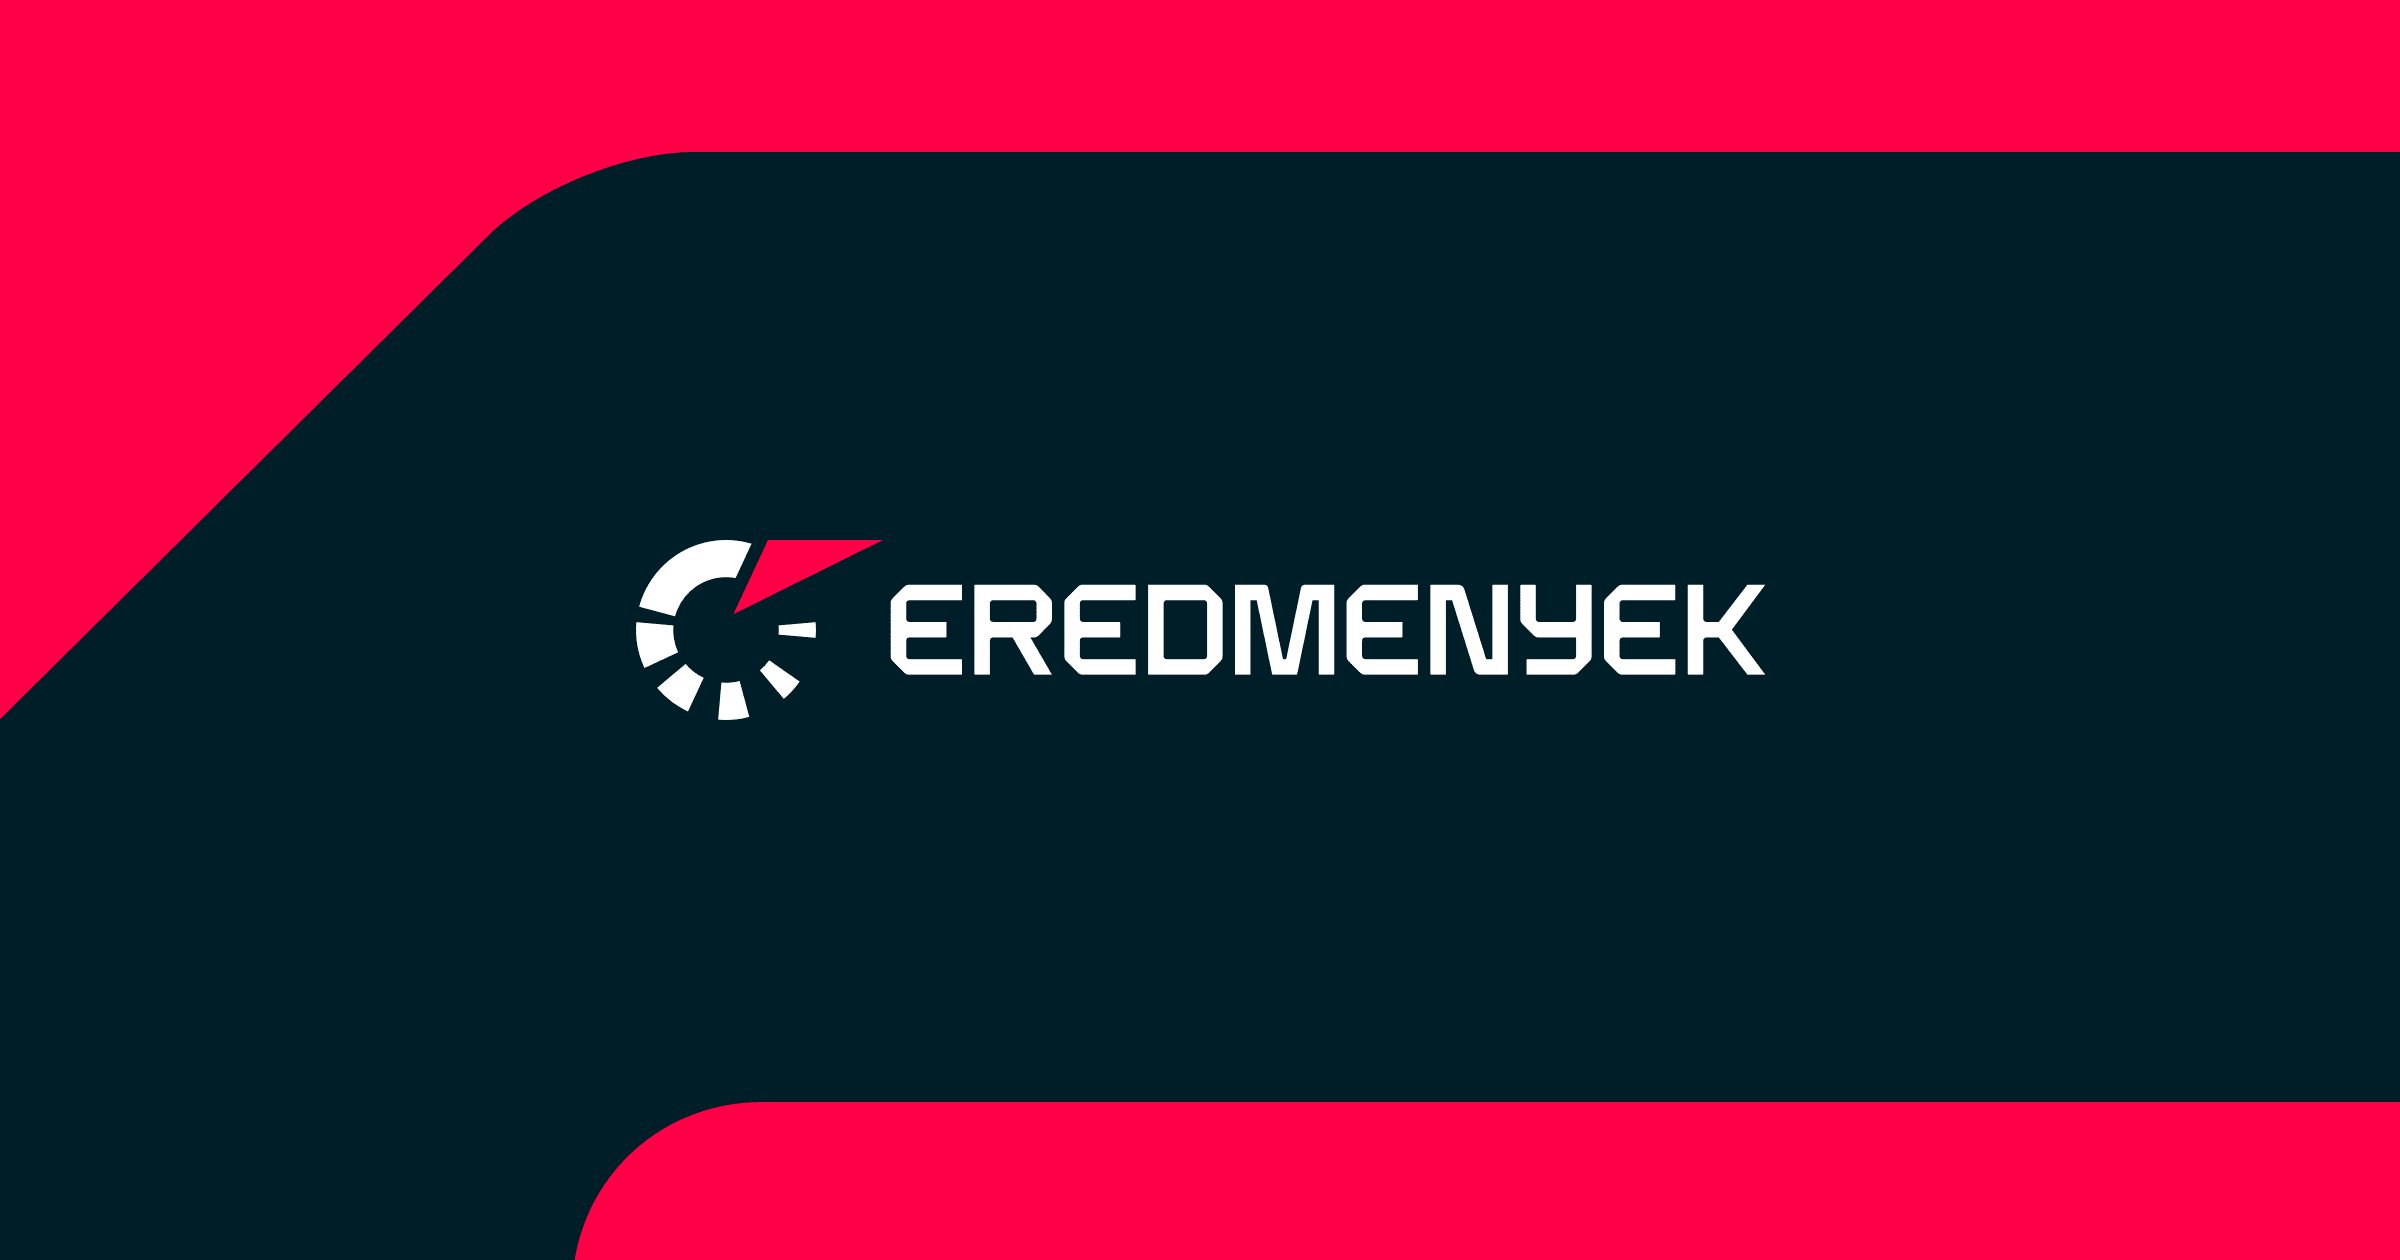 www.eredmenyek.com